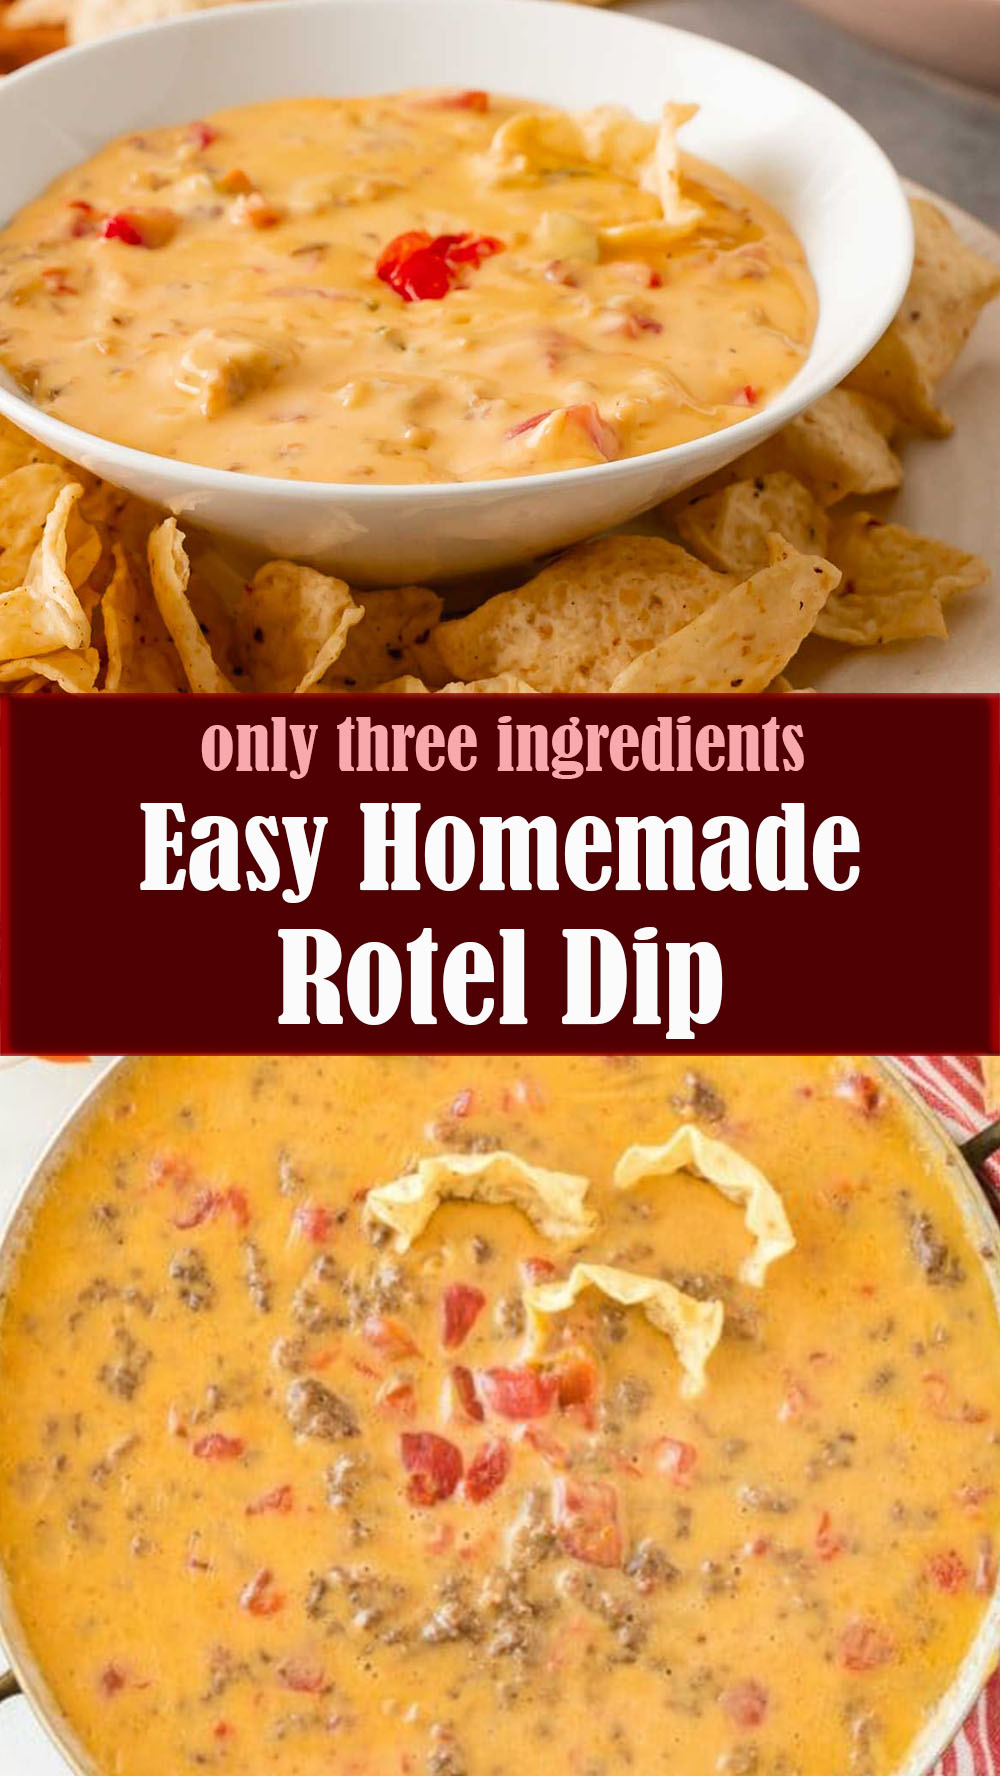 Easy Homemade Rotel Dip